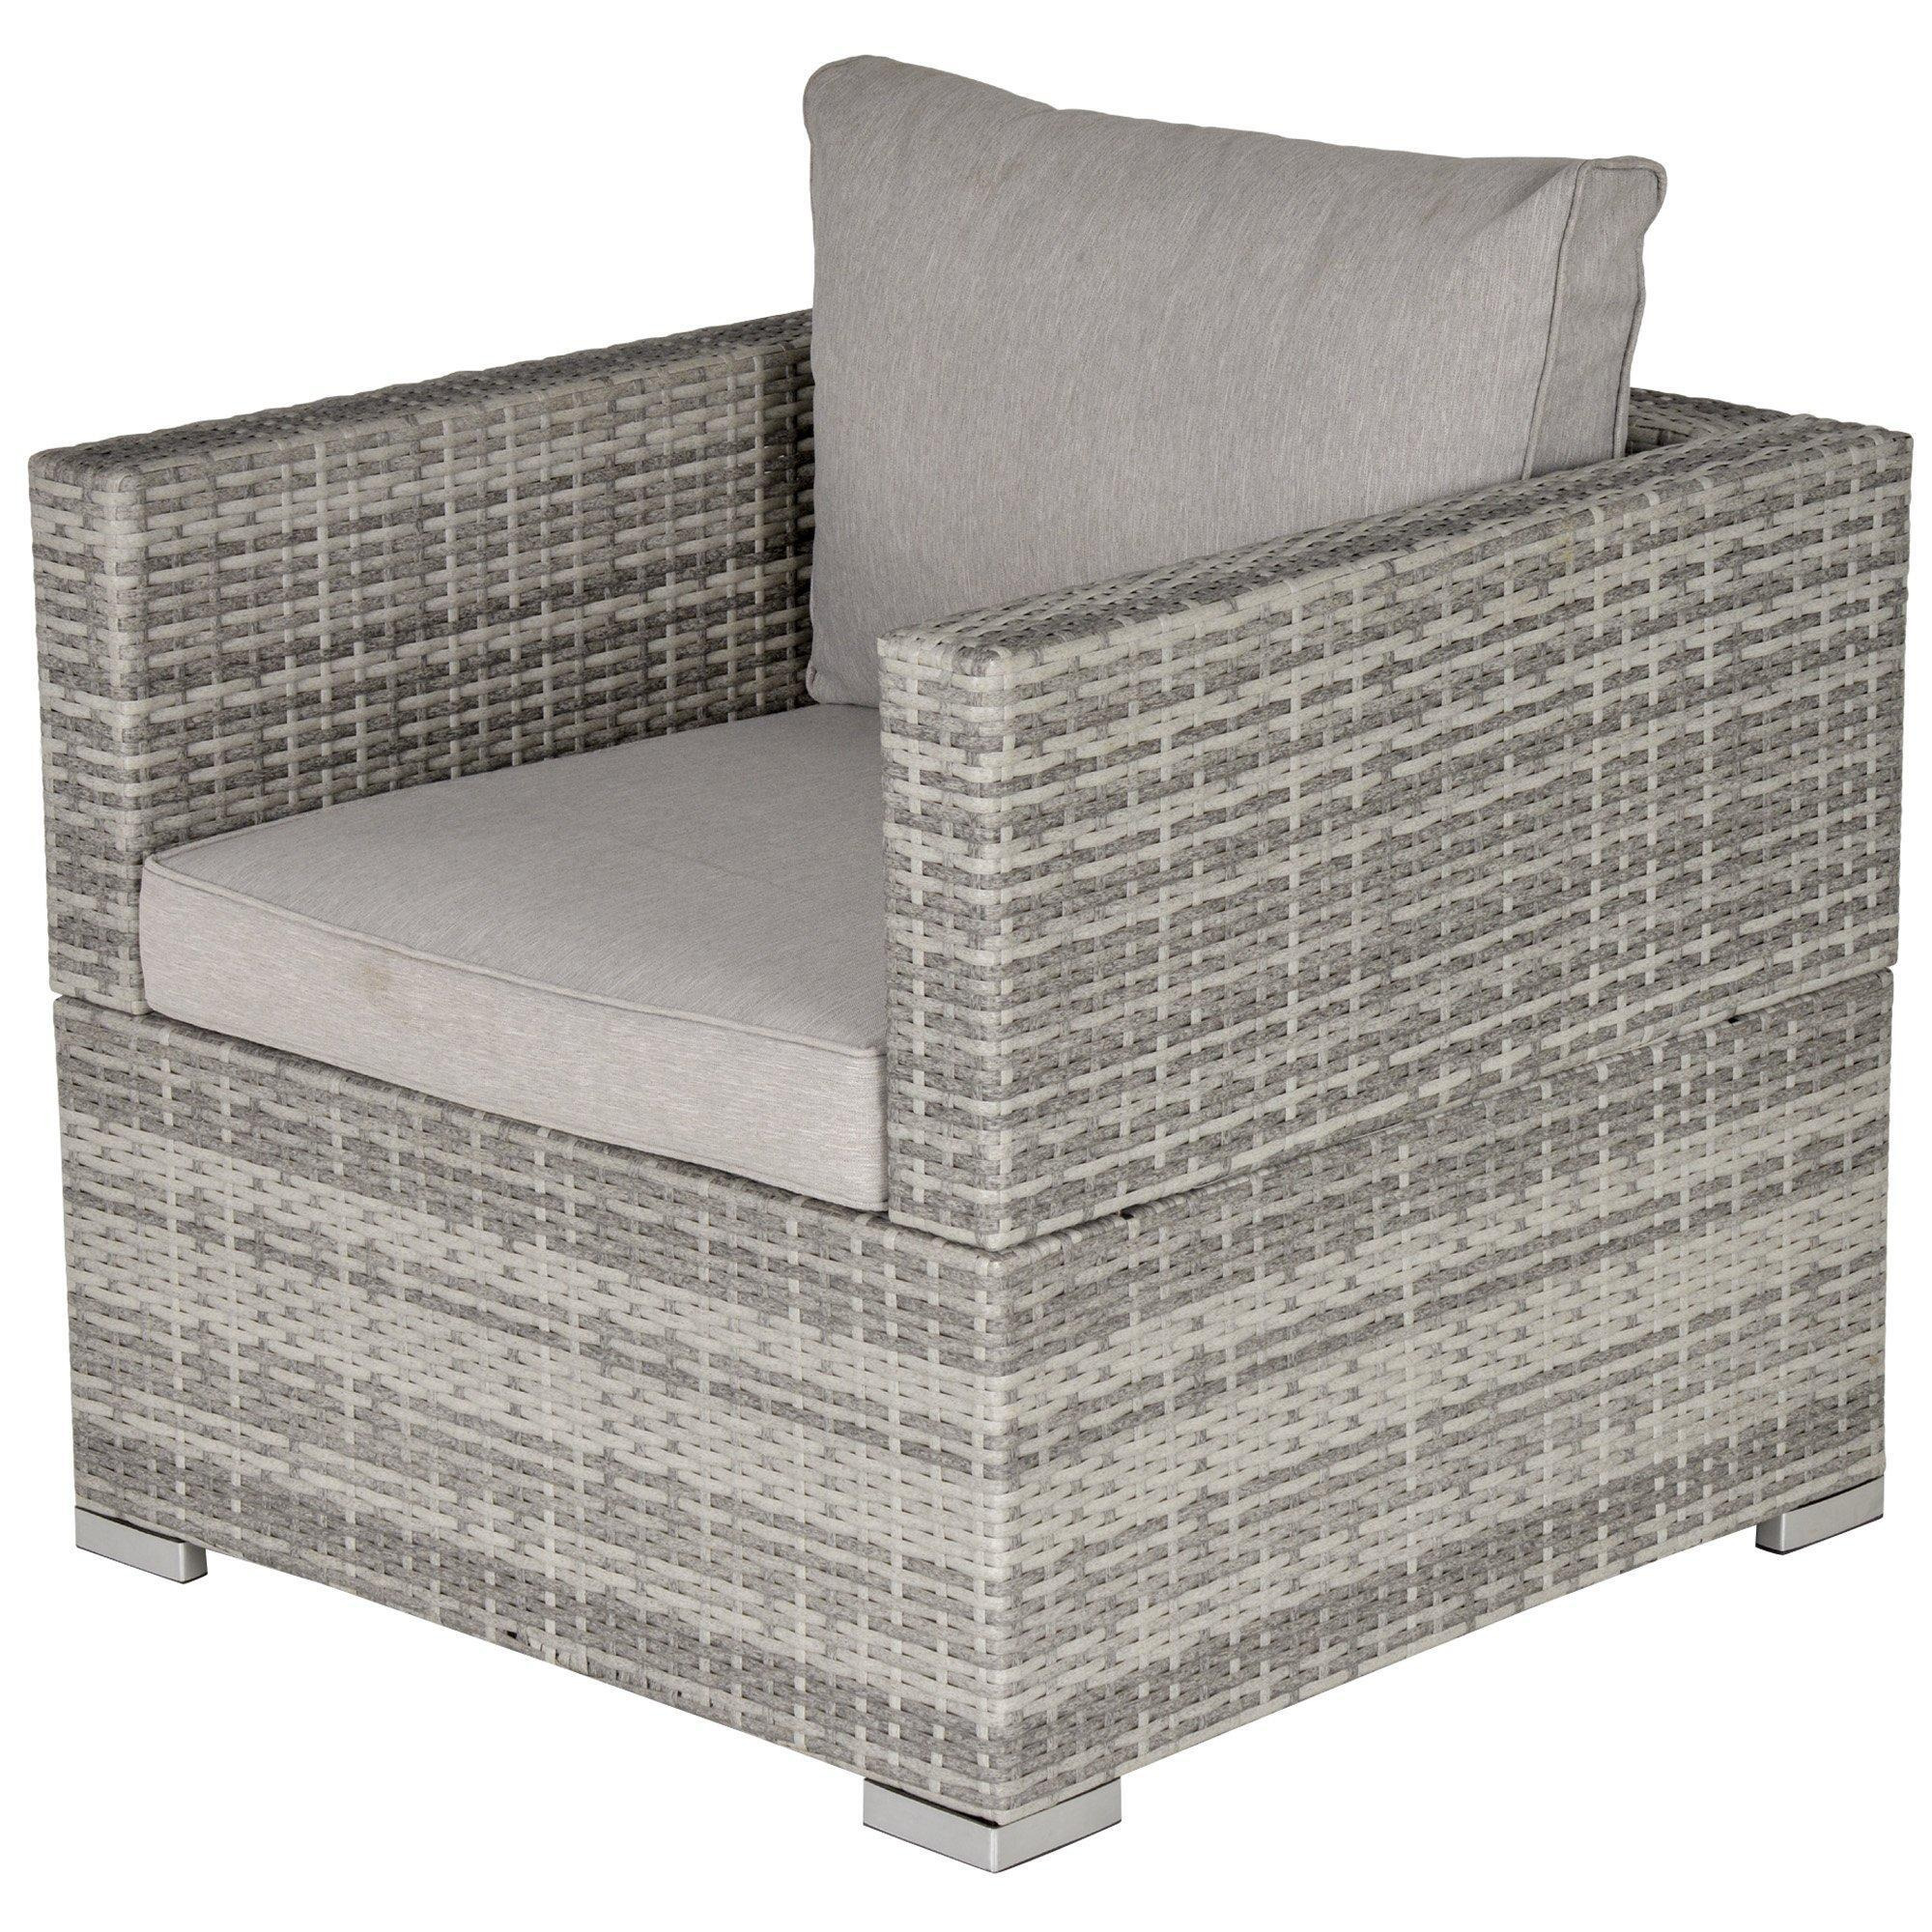 Outdoor Single Wicker Furniture Sofa with Padded Cushion Garden Balcony - image 1